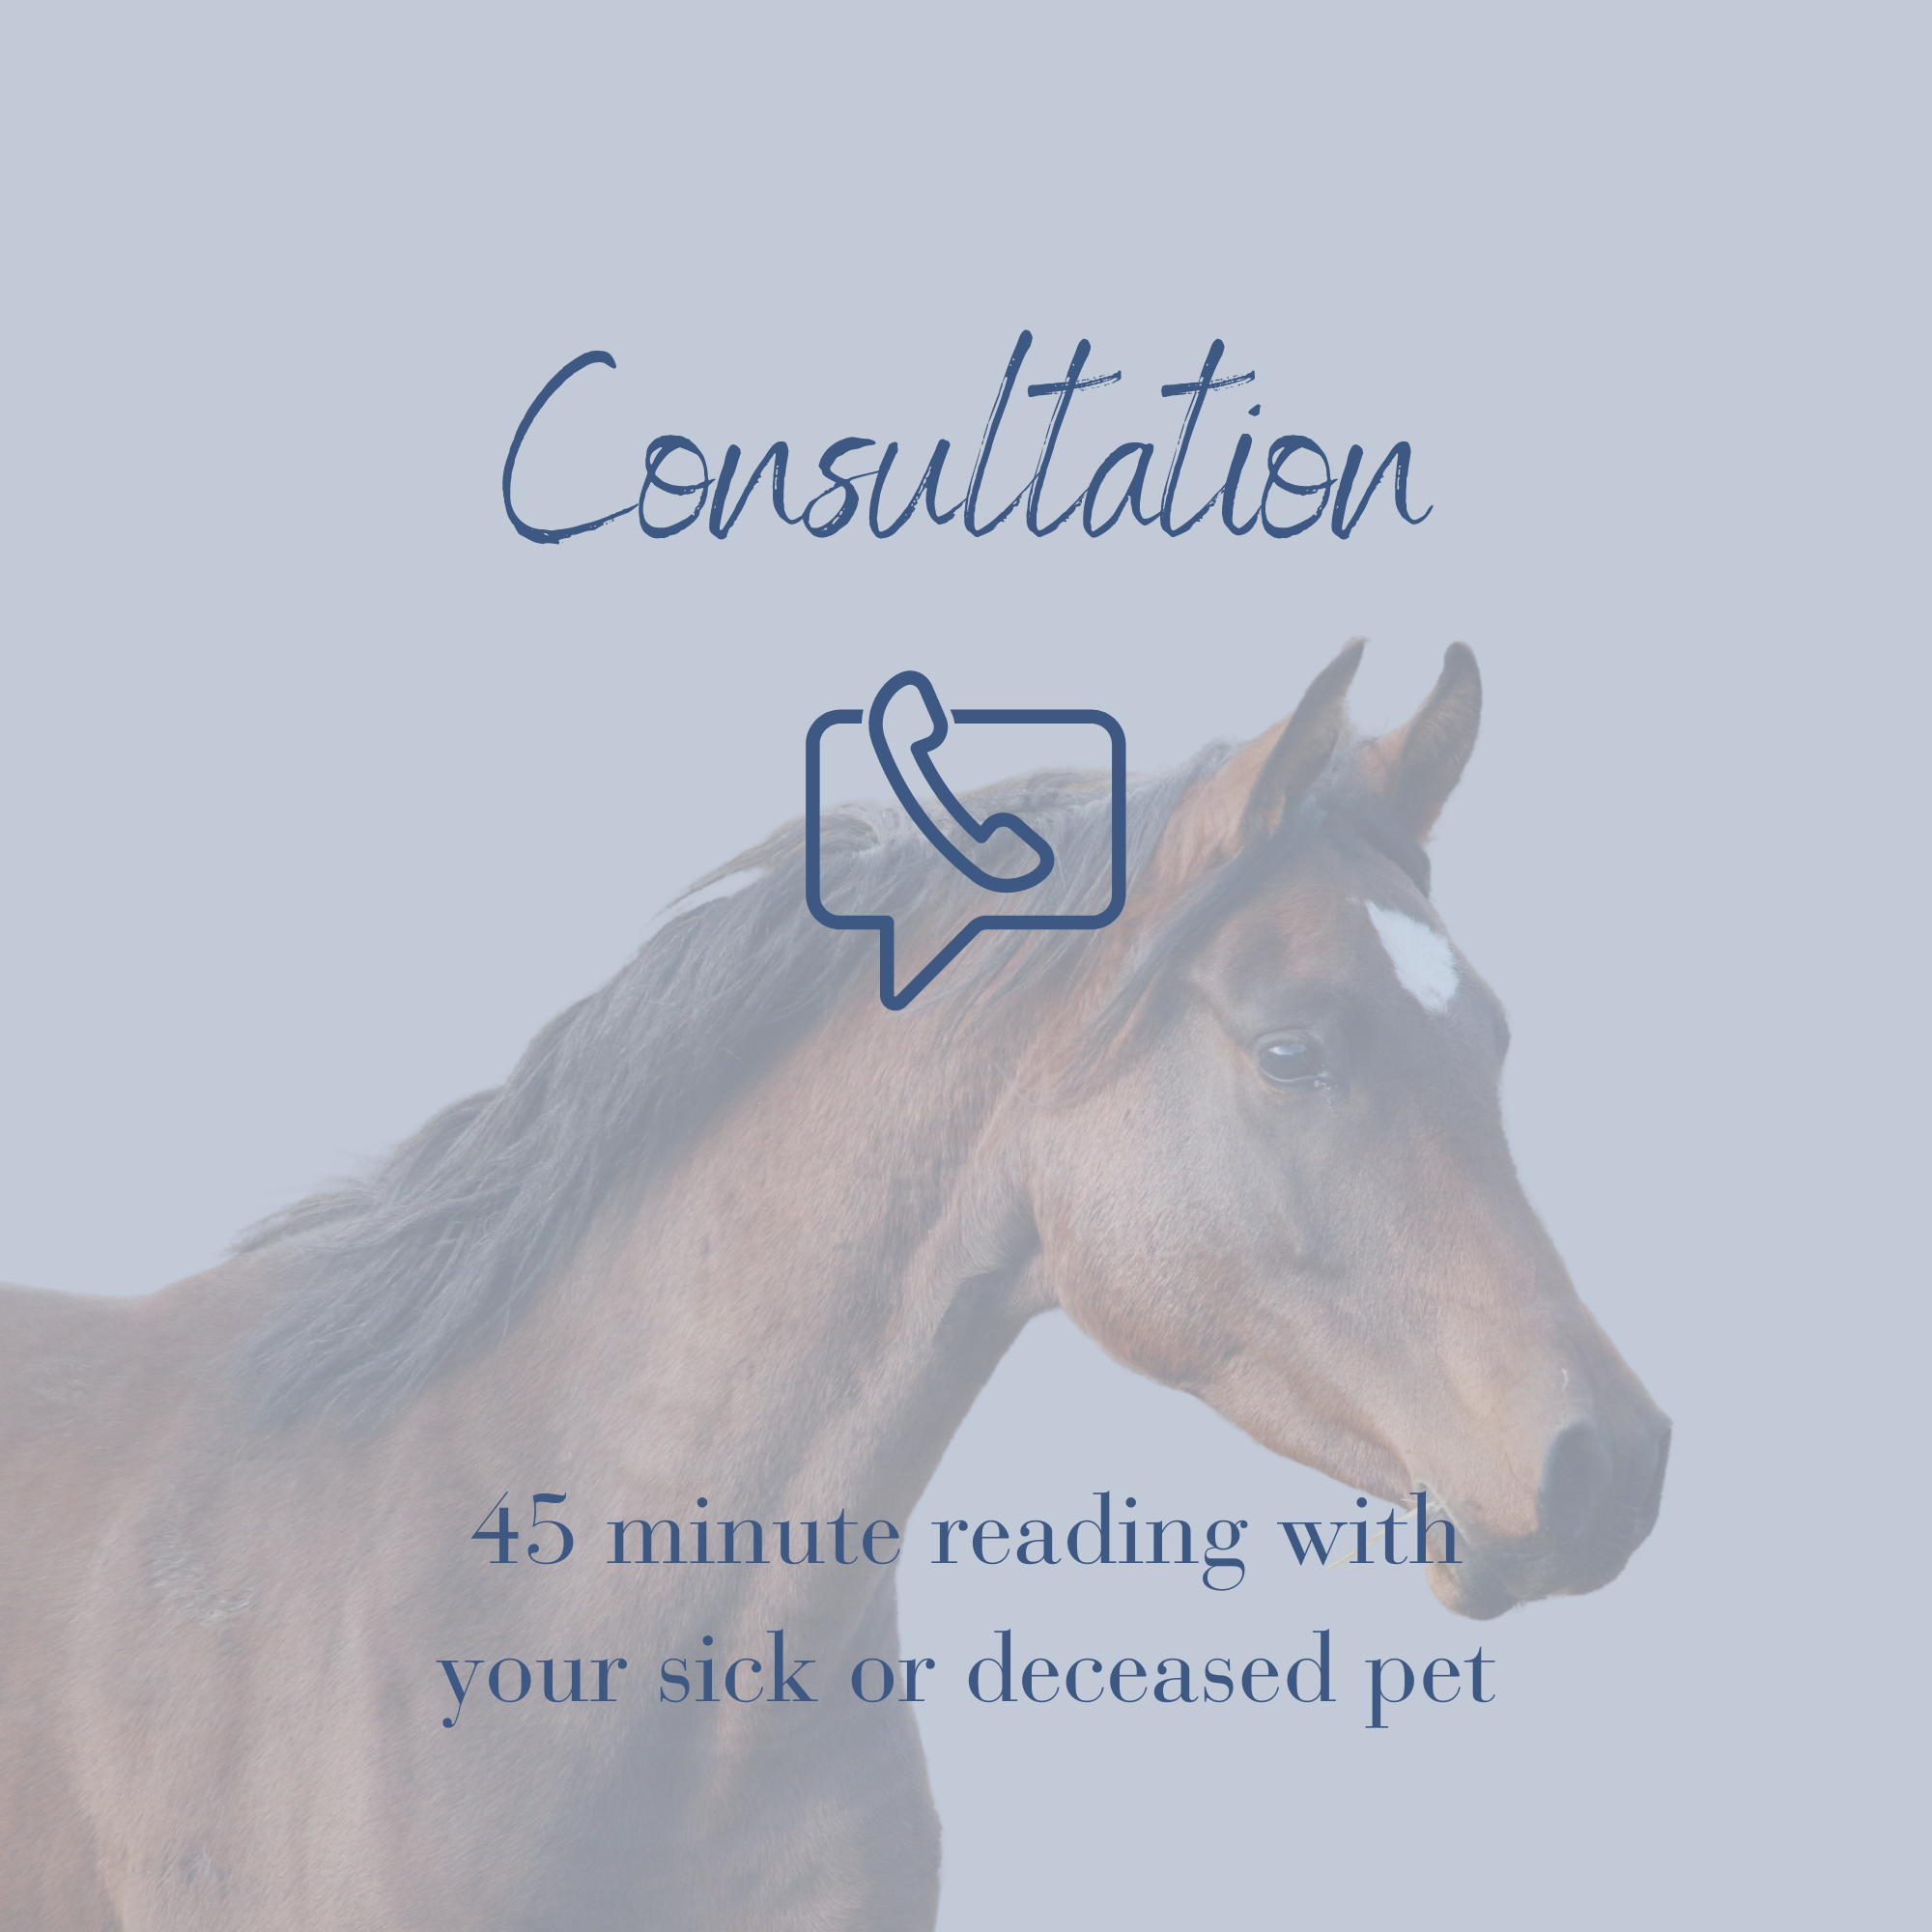 Reading deceased pet animal consultation